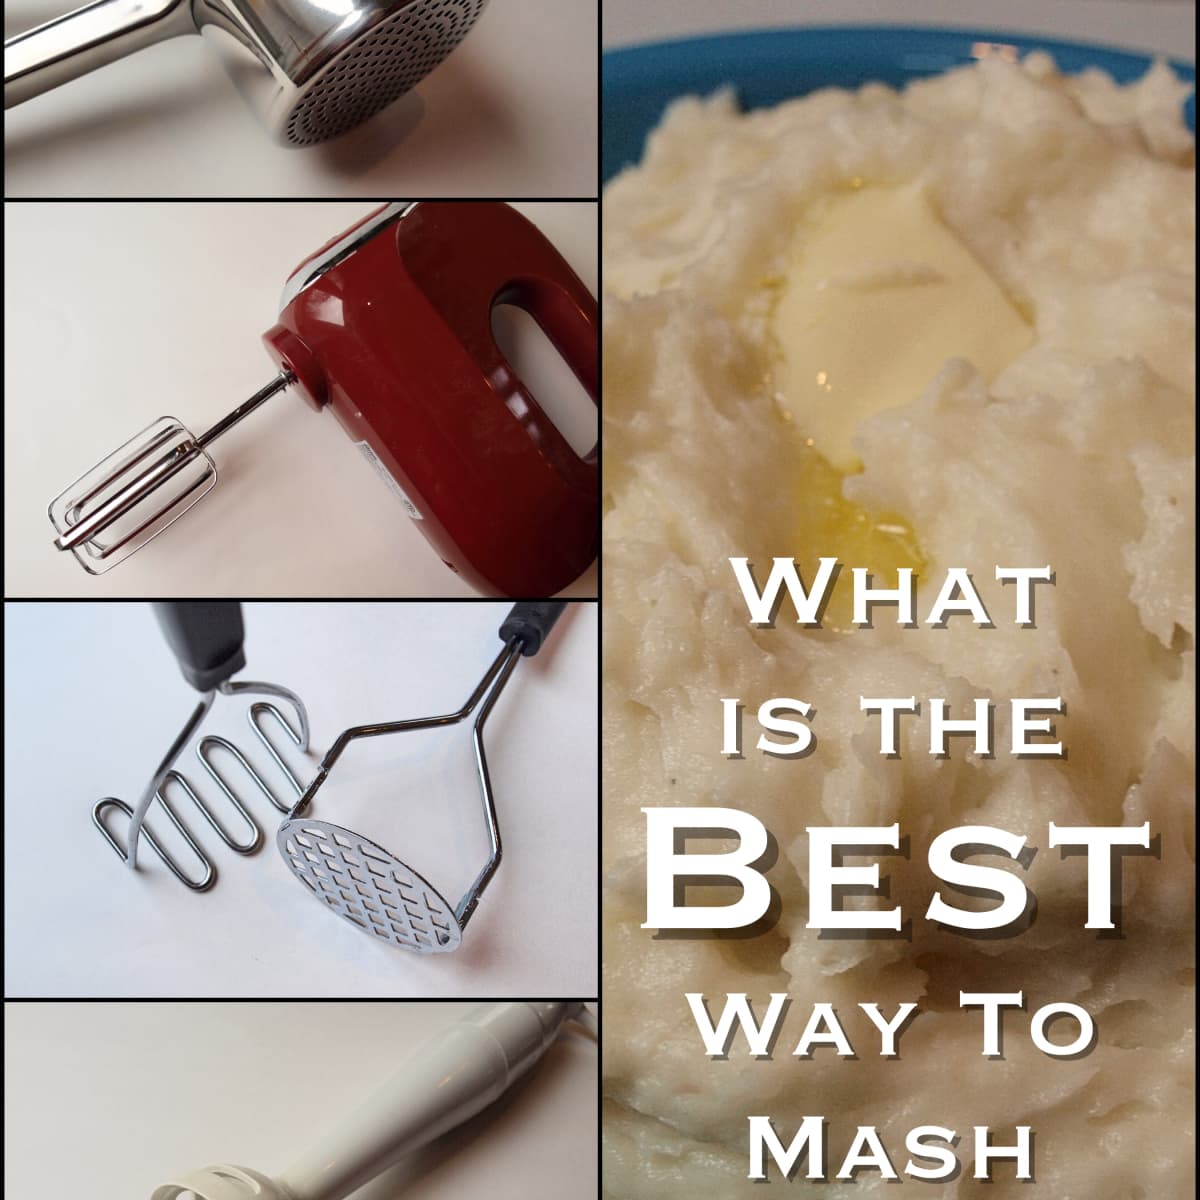 Do Not Use a Potato Masher to Mash Potatoes